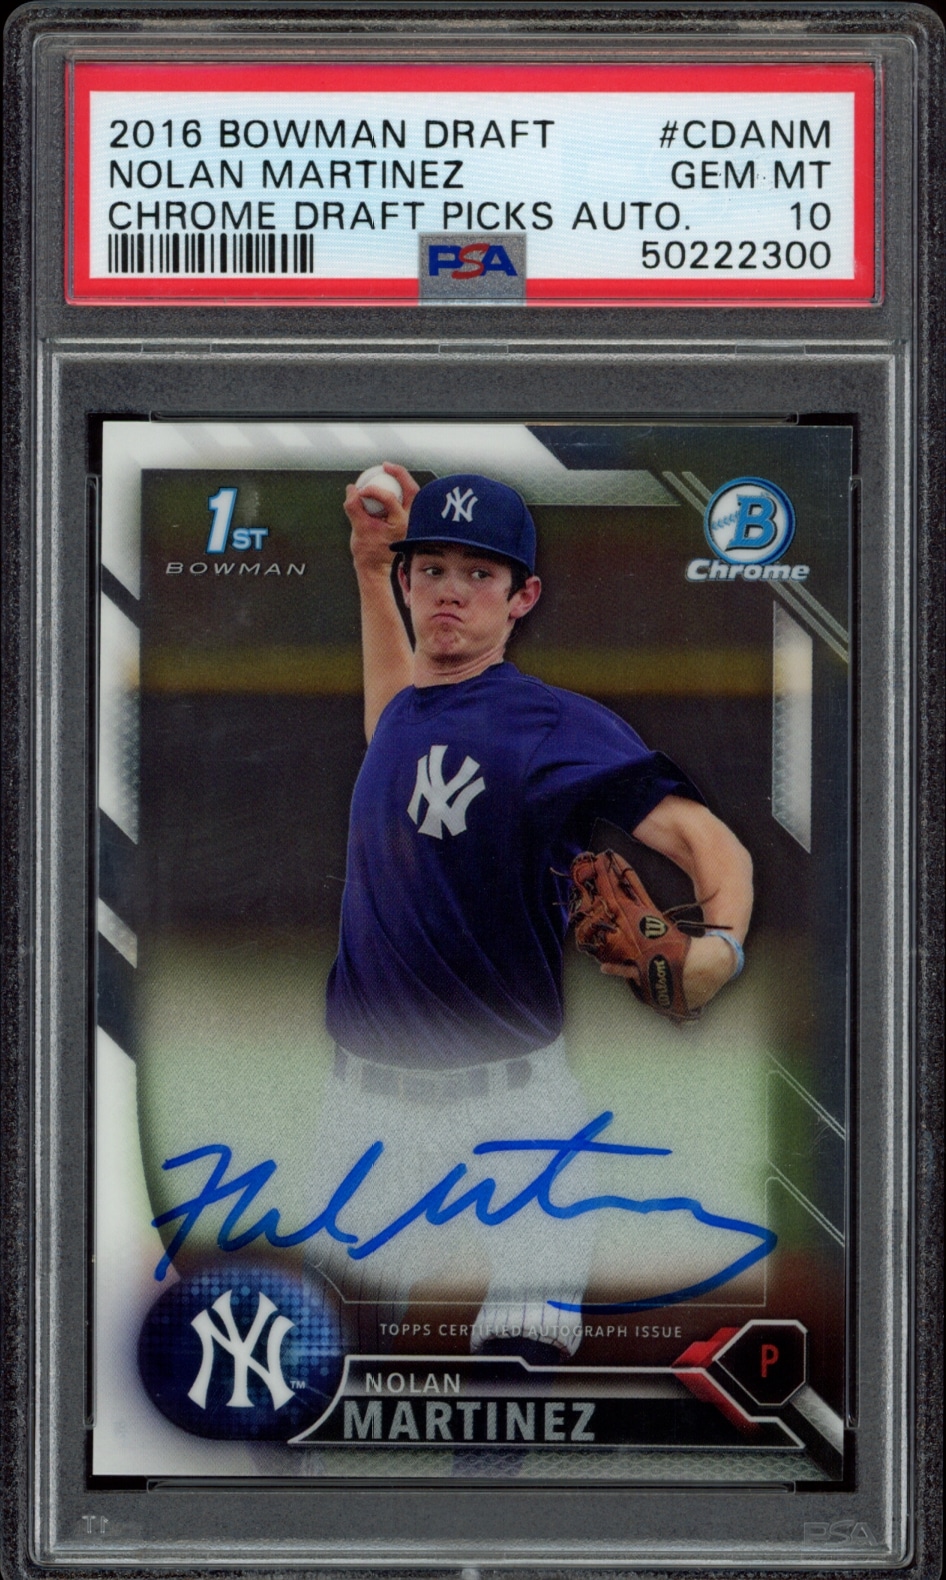 2016 Bowman Draft Nolan Martinez autographed card, NY Yankees, with PSA 10 rating.